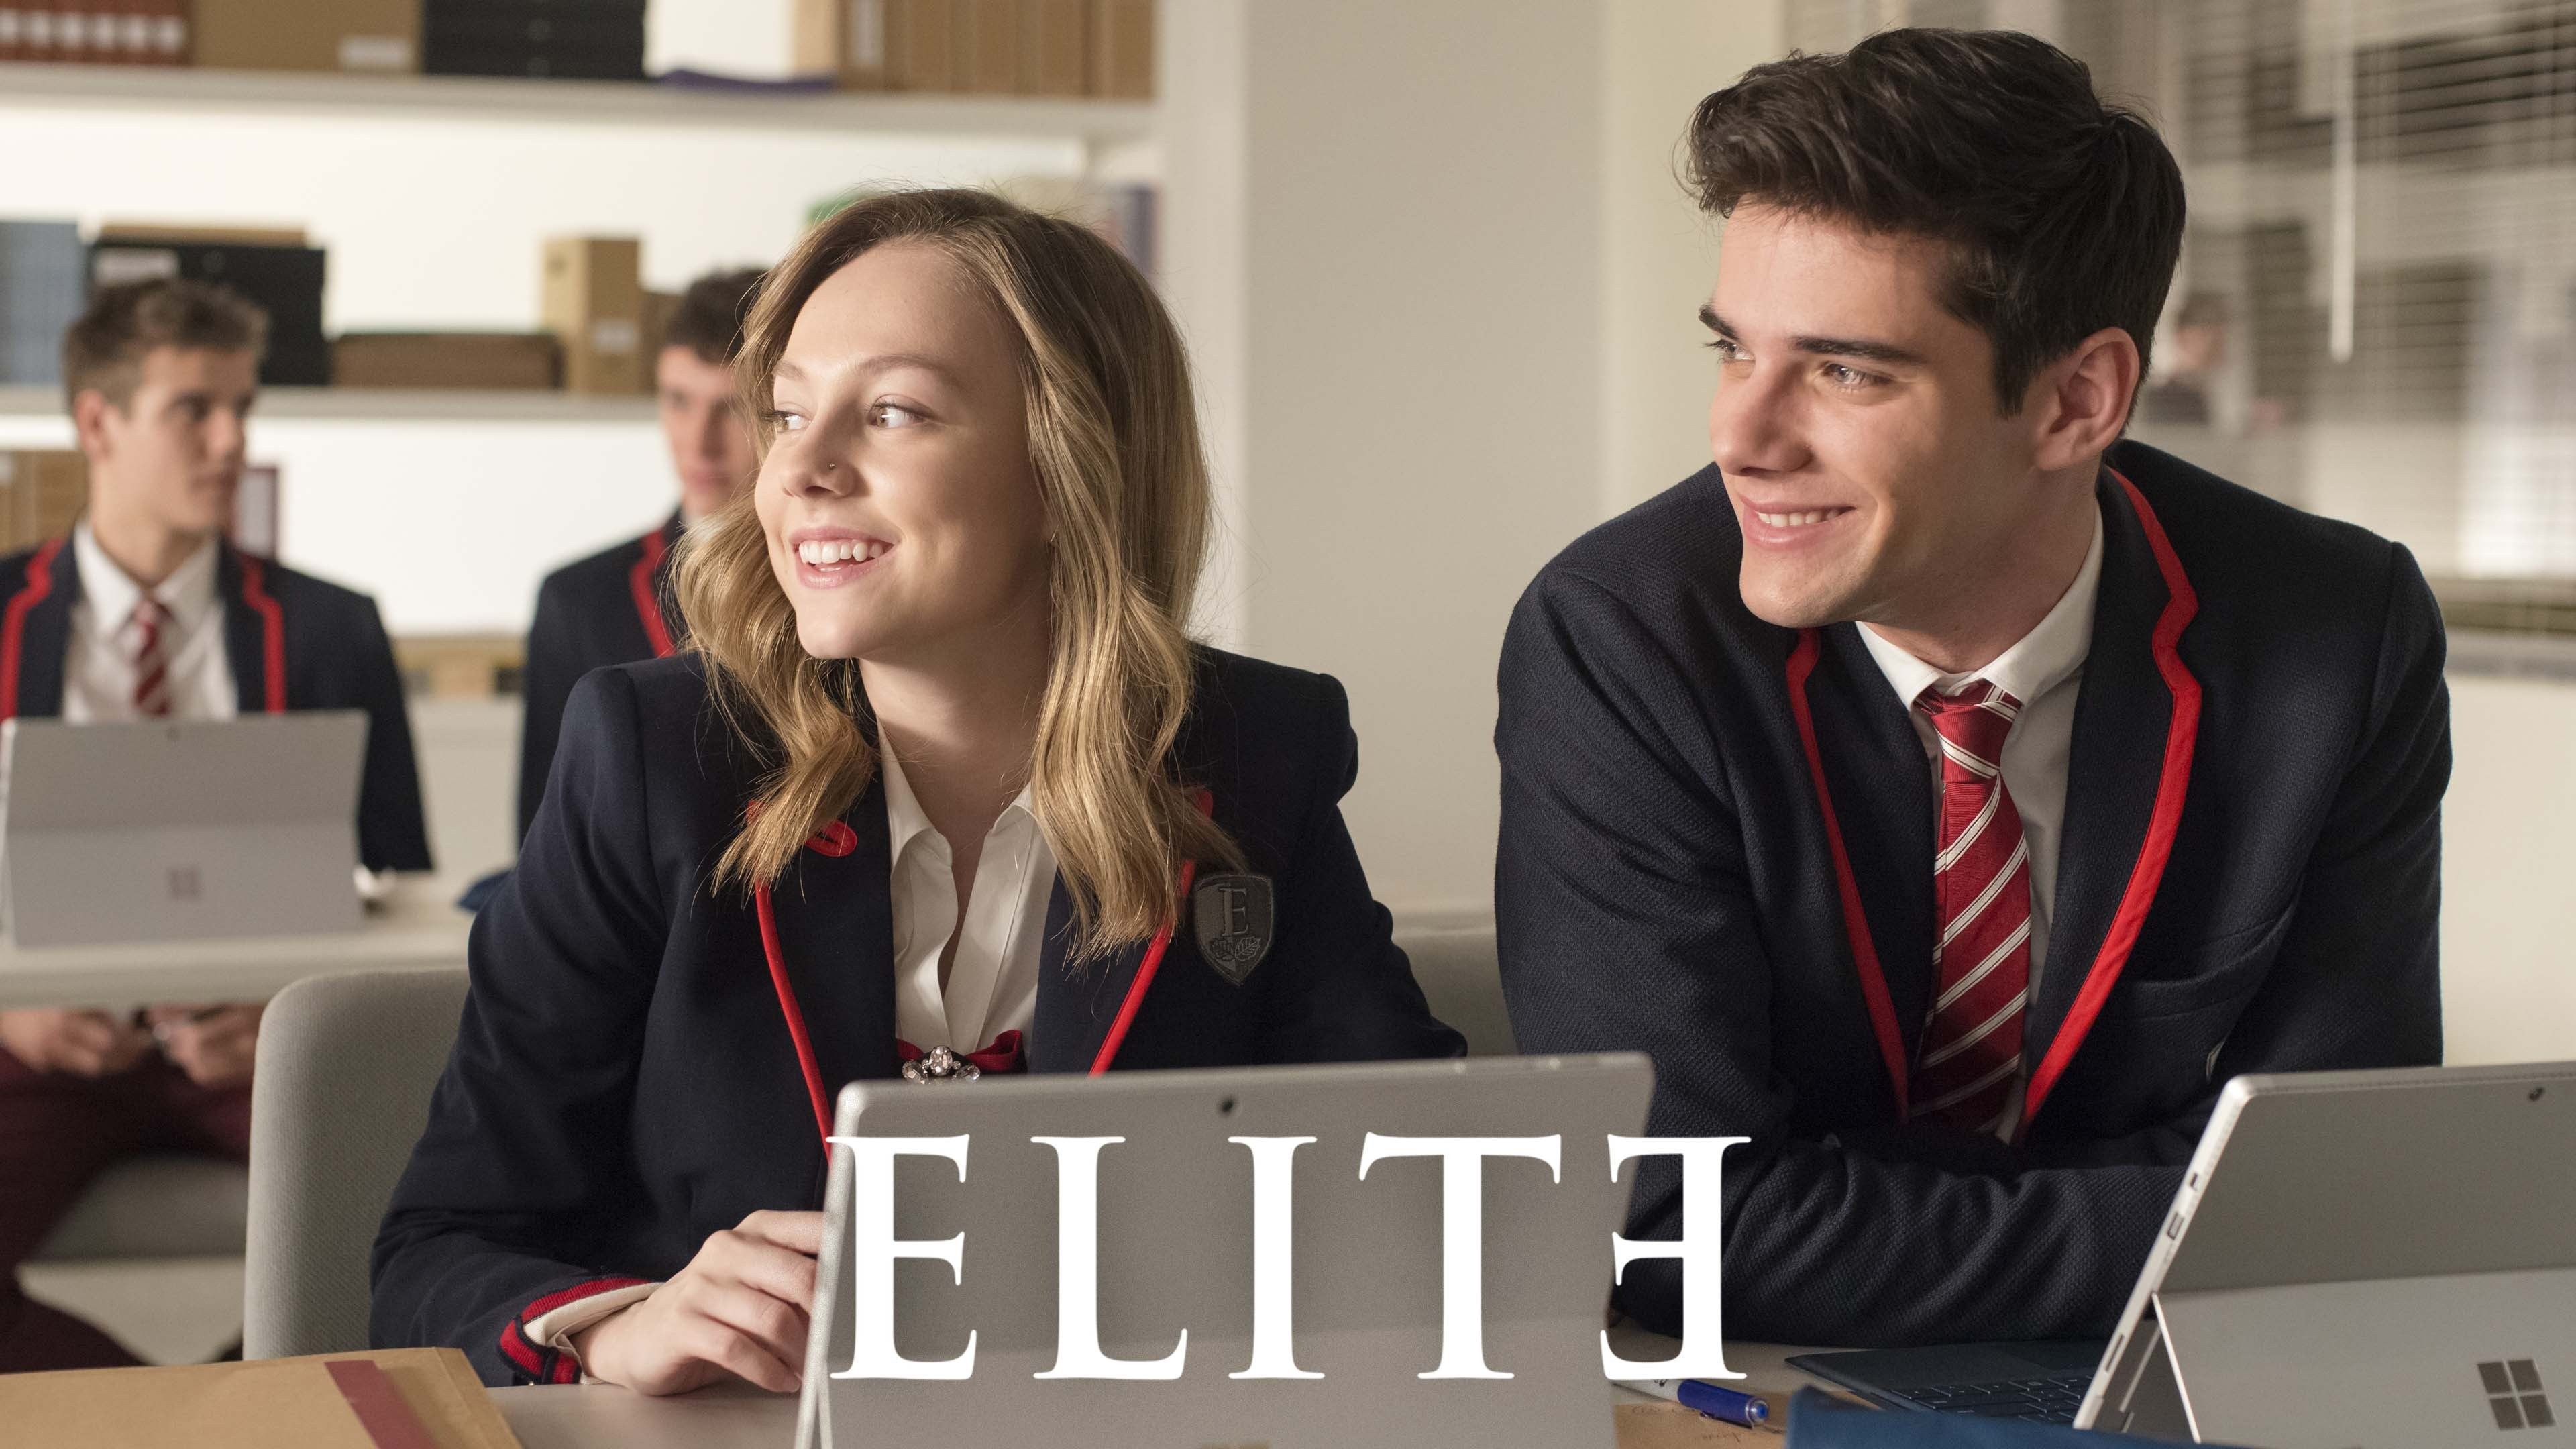 Classroom of the Elite Season 2 - Episode 01 [English Sub] - video  Dailymotion